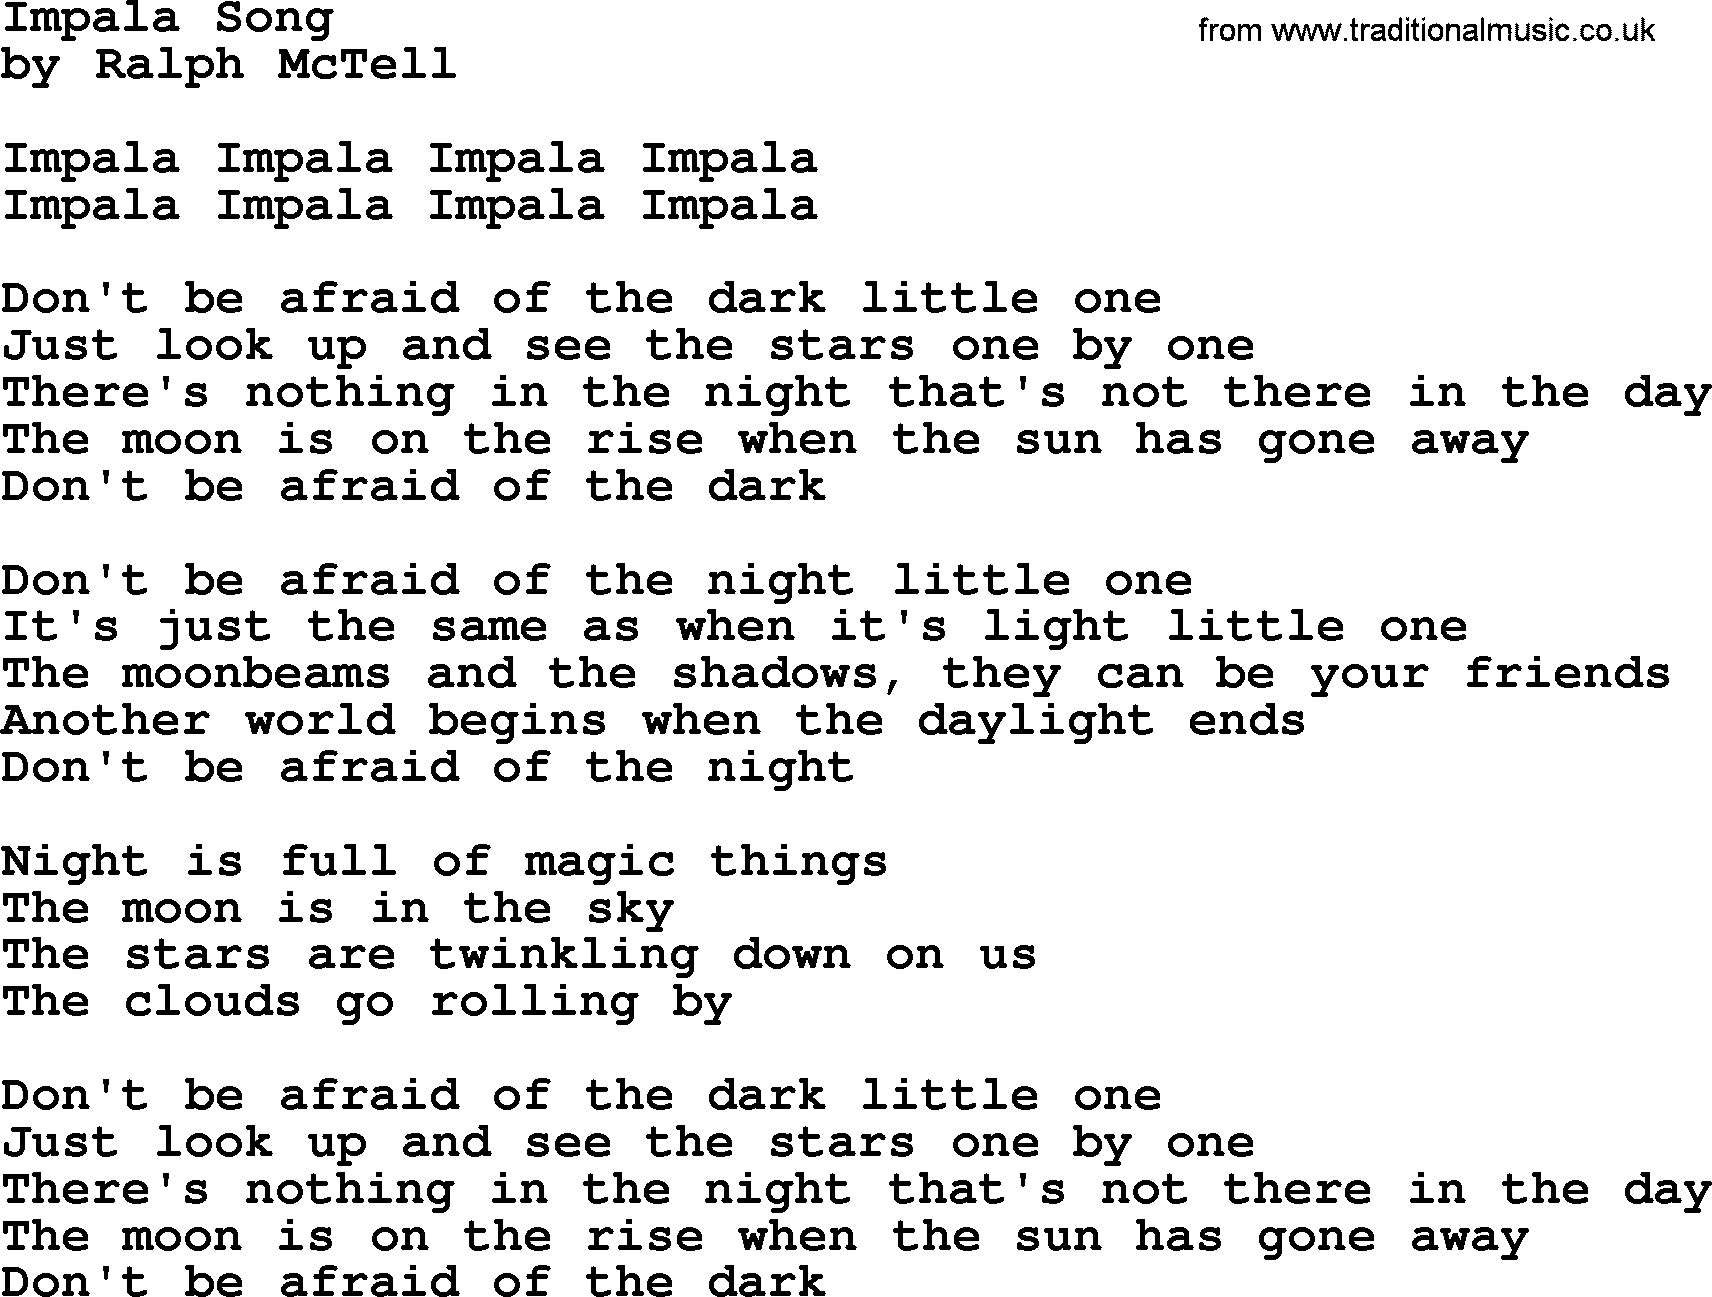 Ralph McTell Song: Impala Song, lyrics